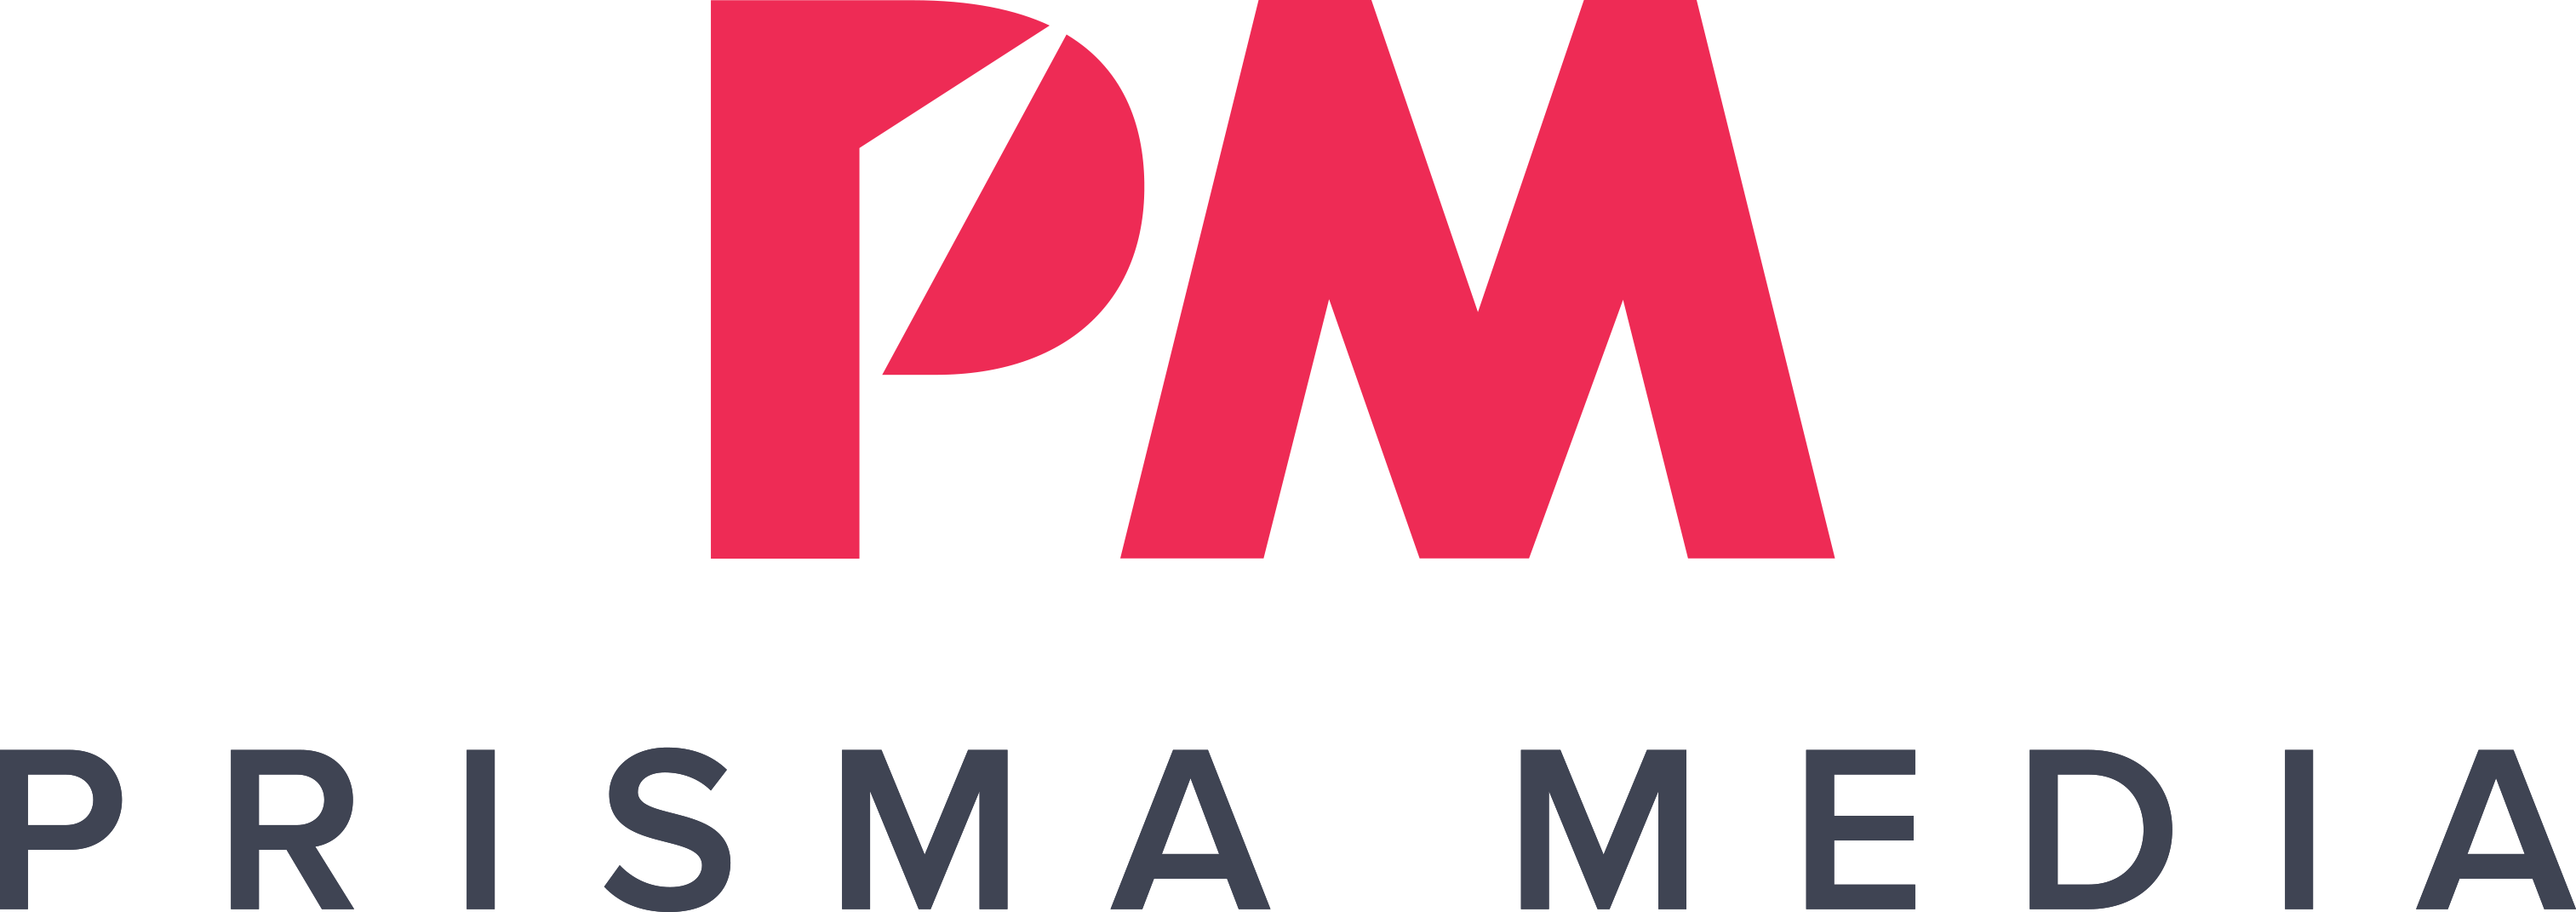 Prisma Media Group